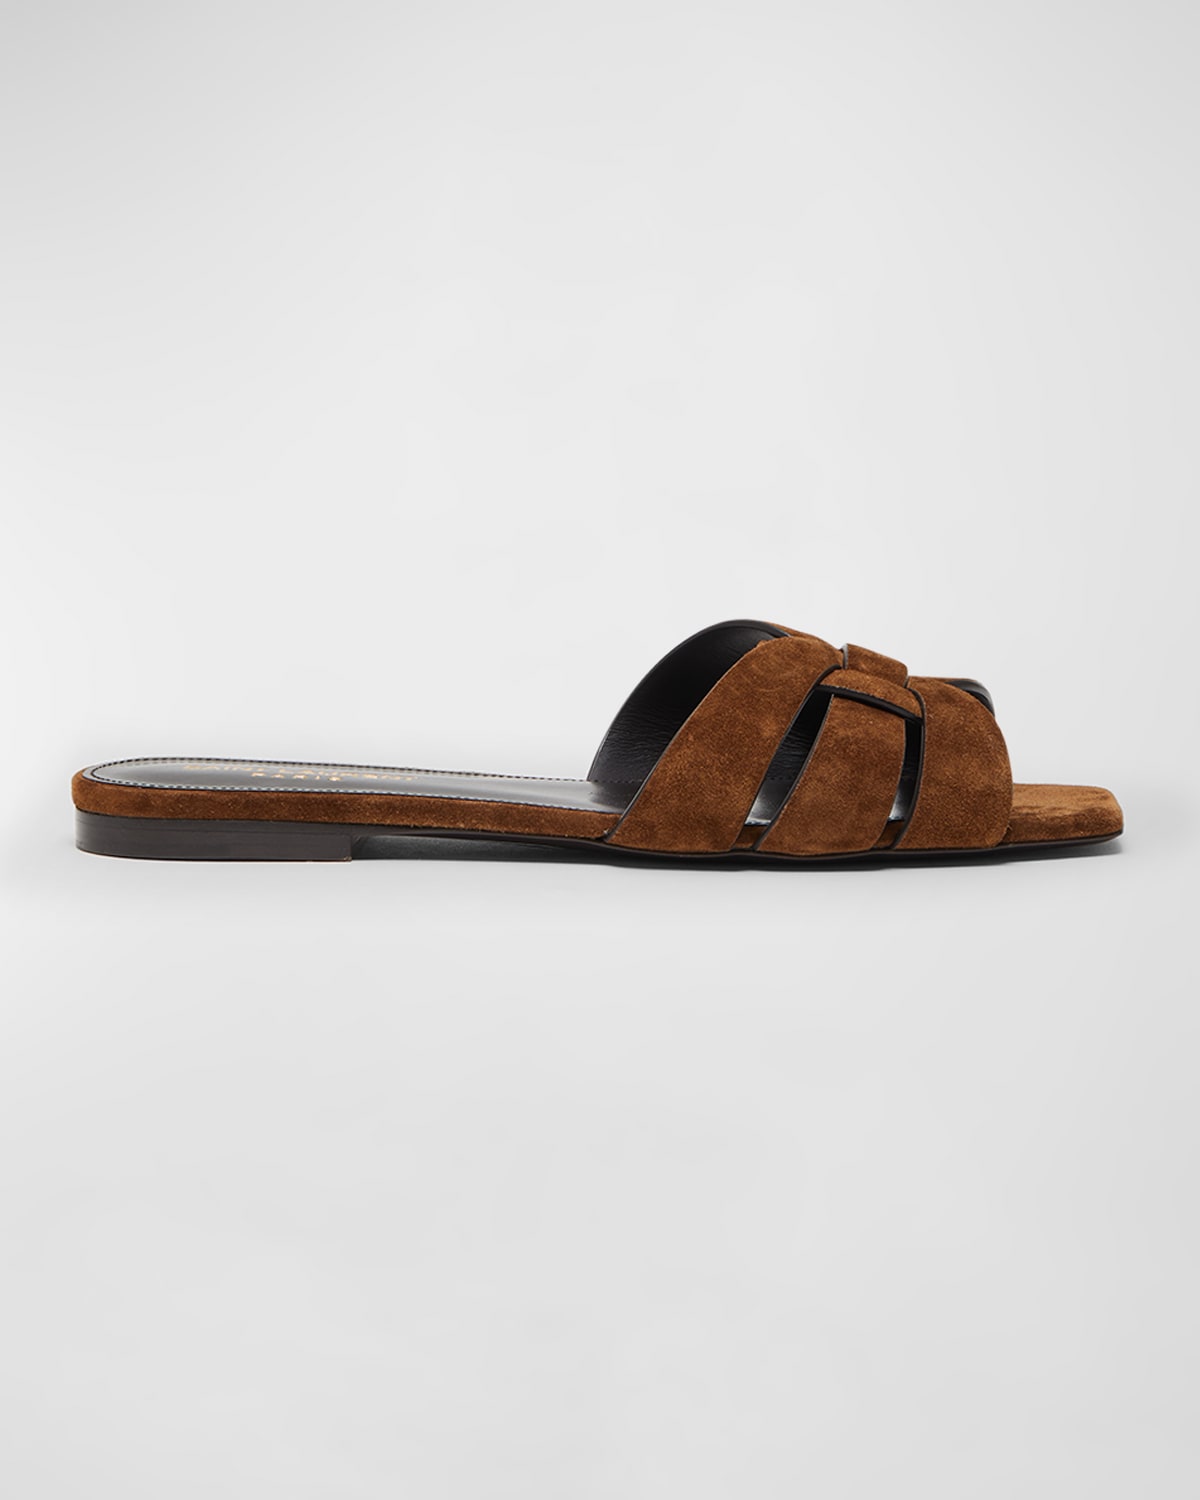 Saint Laurent Tribute Croco Flat Slide Sandals | Neiman Marcus